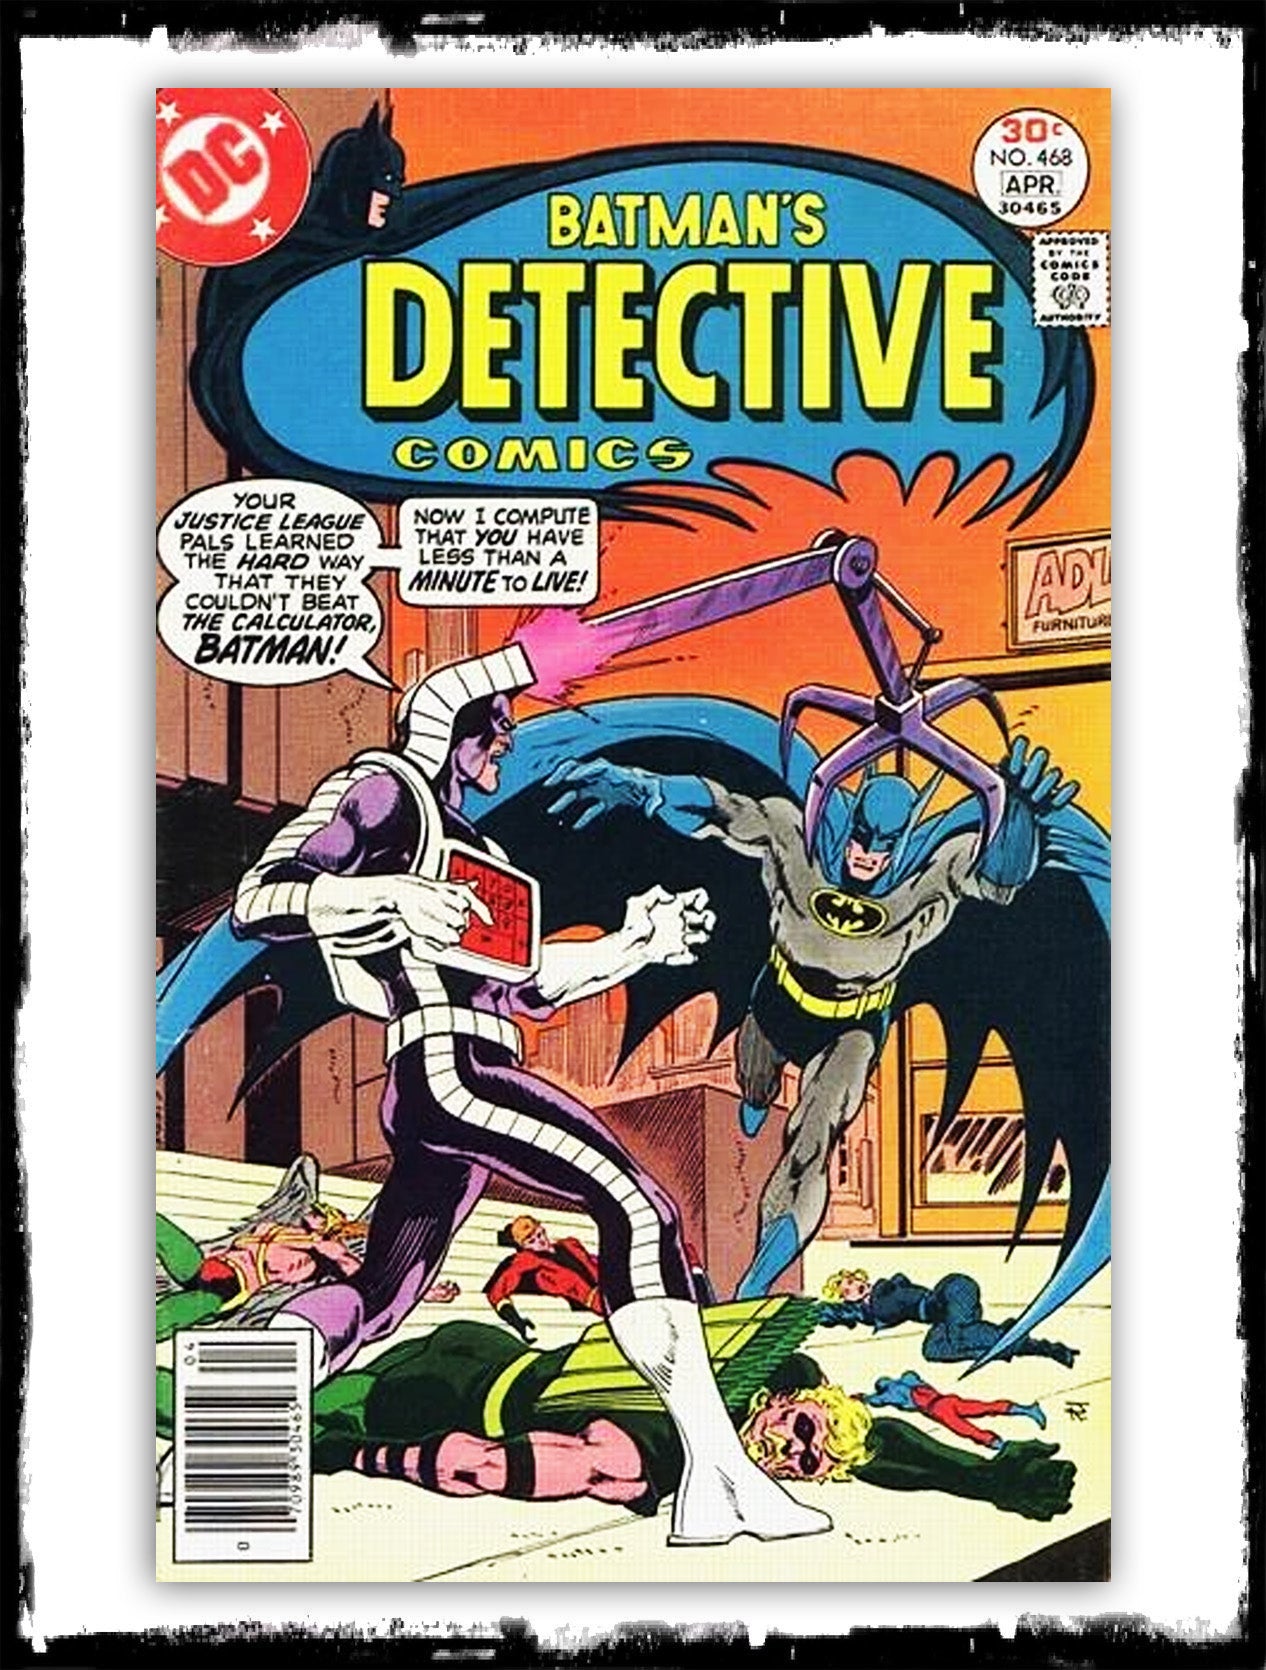 DETECTIVE COMICS - #468 (1977 - FN/VF)